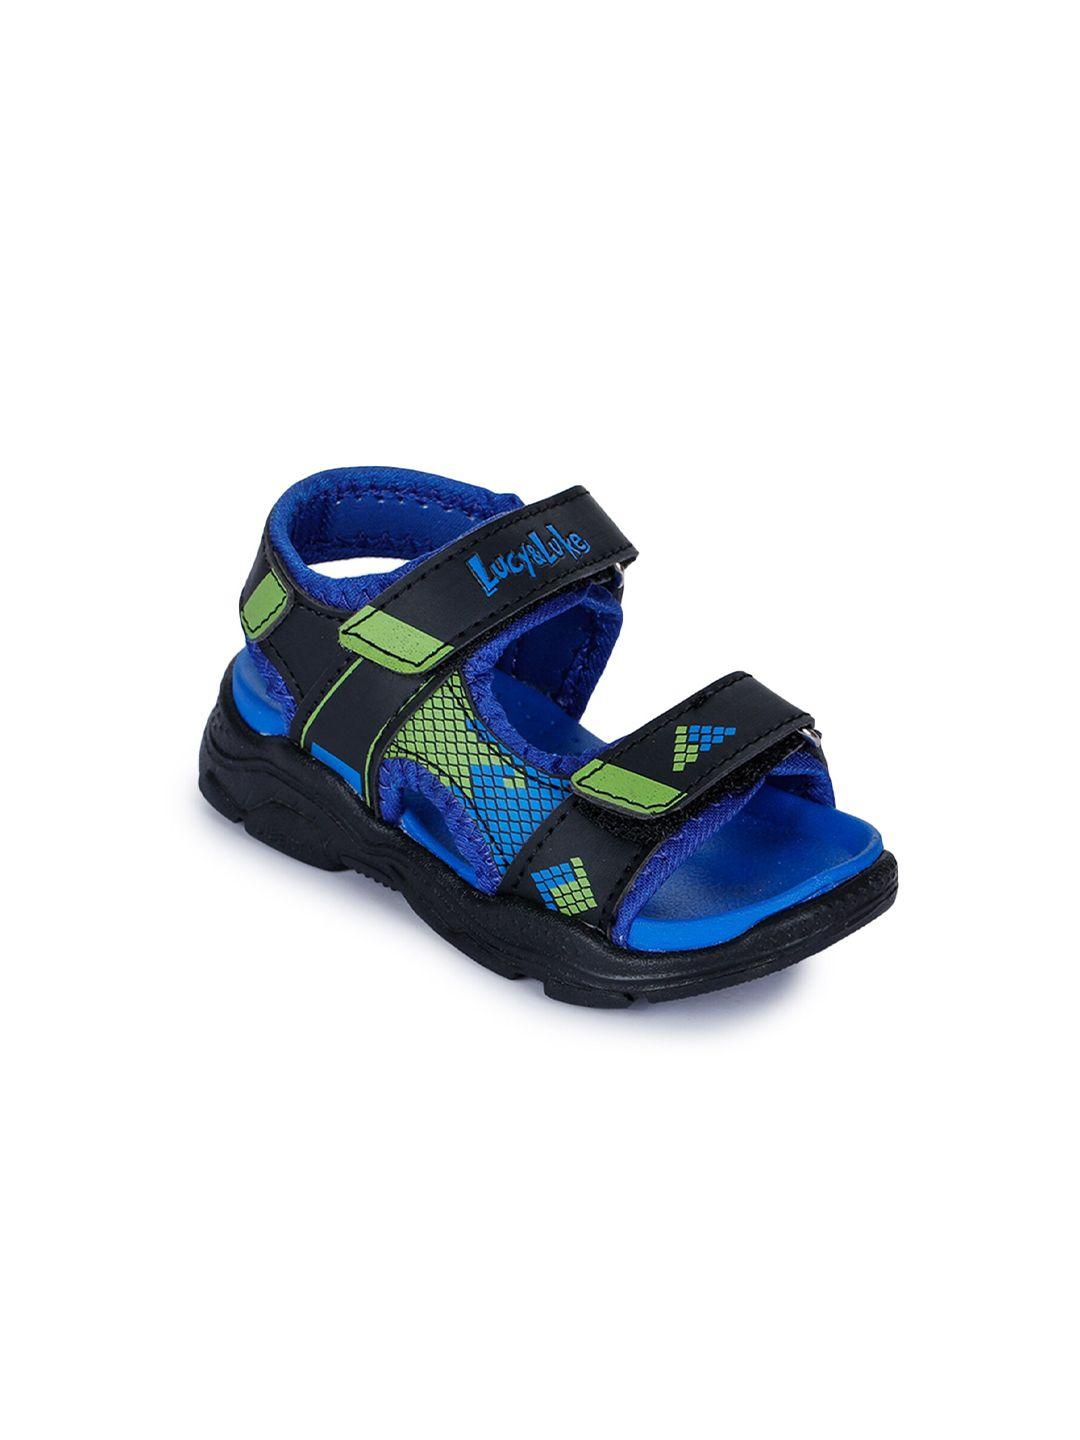 liberty kids blue & black sports sandals